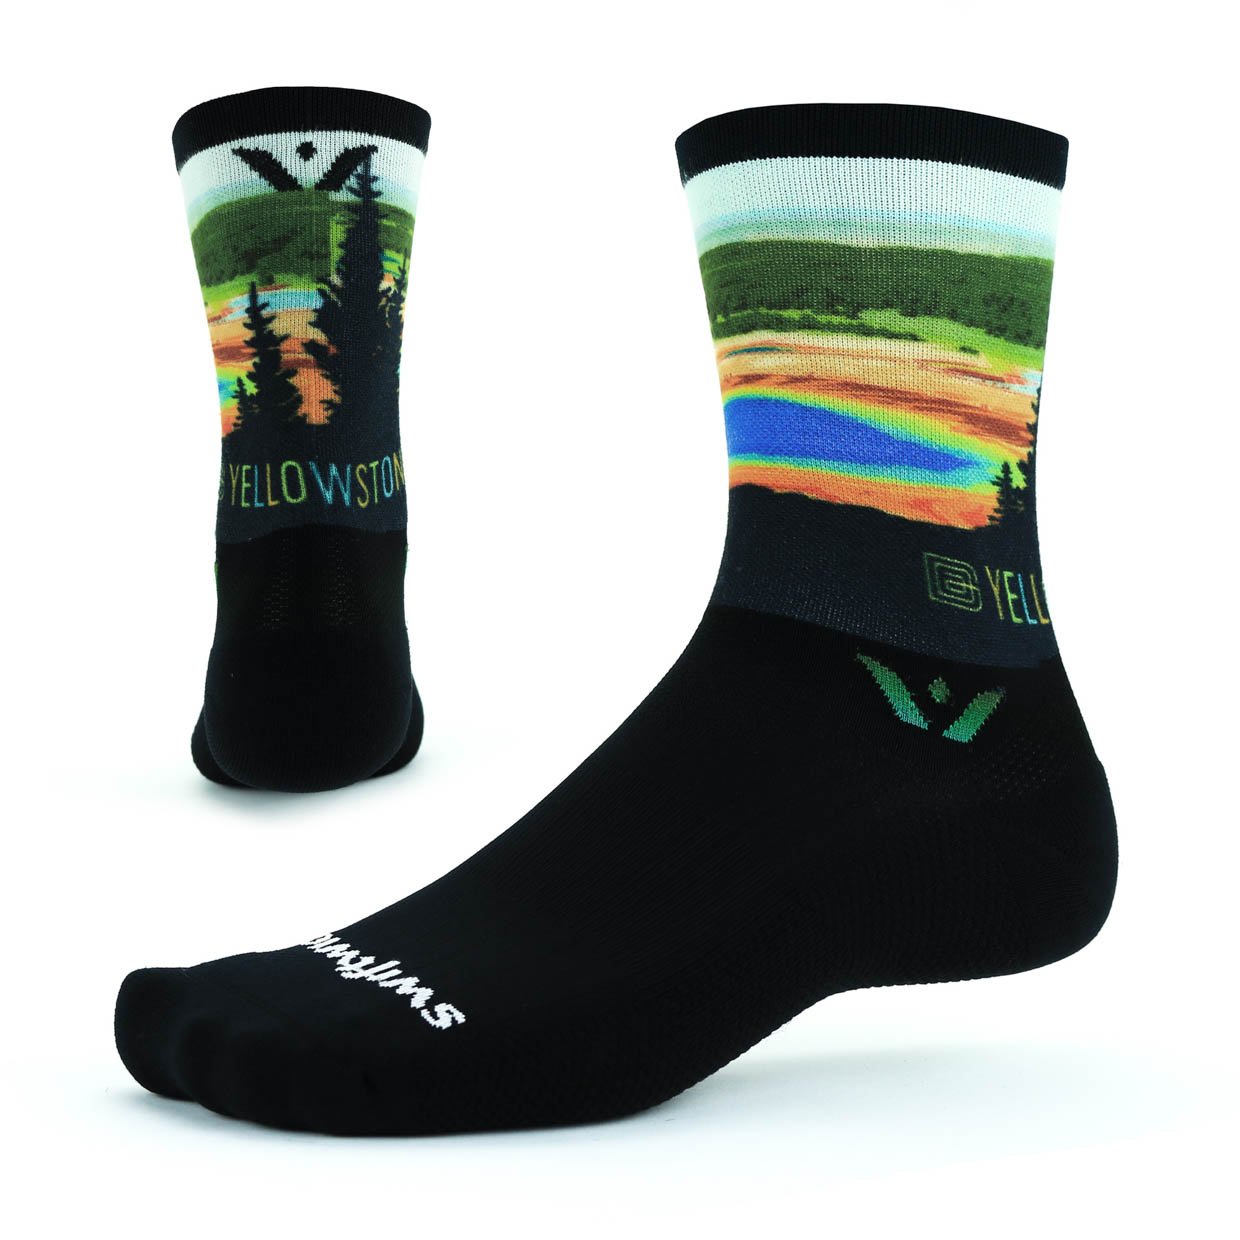 Swiftwick National Parks Socks